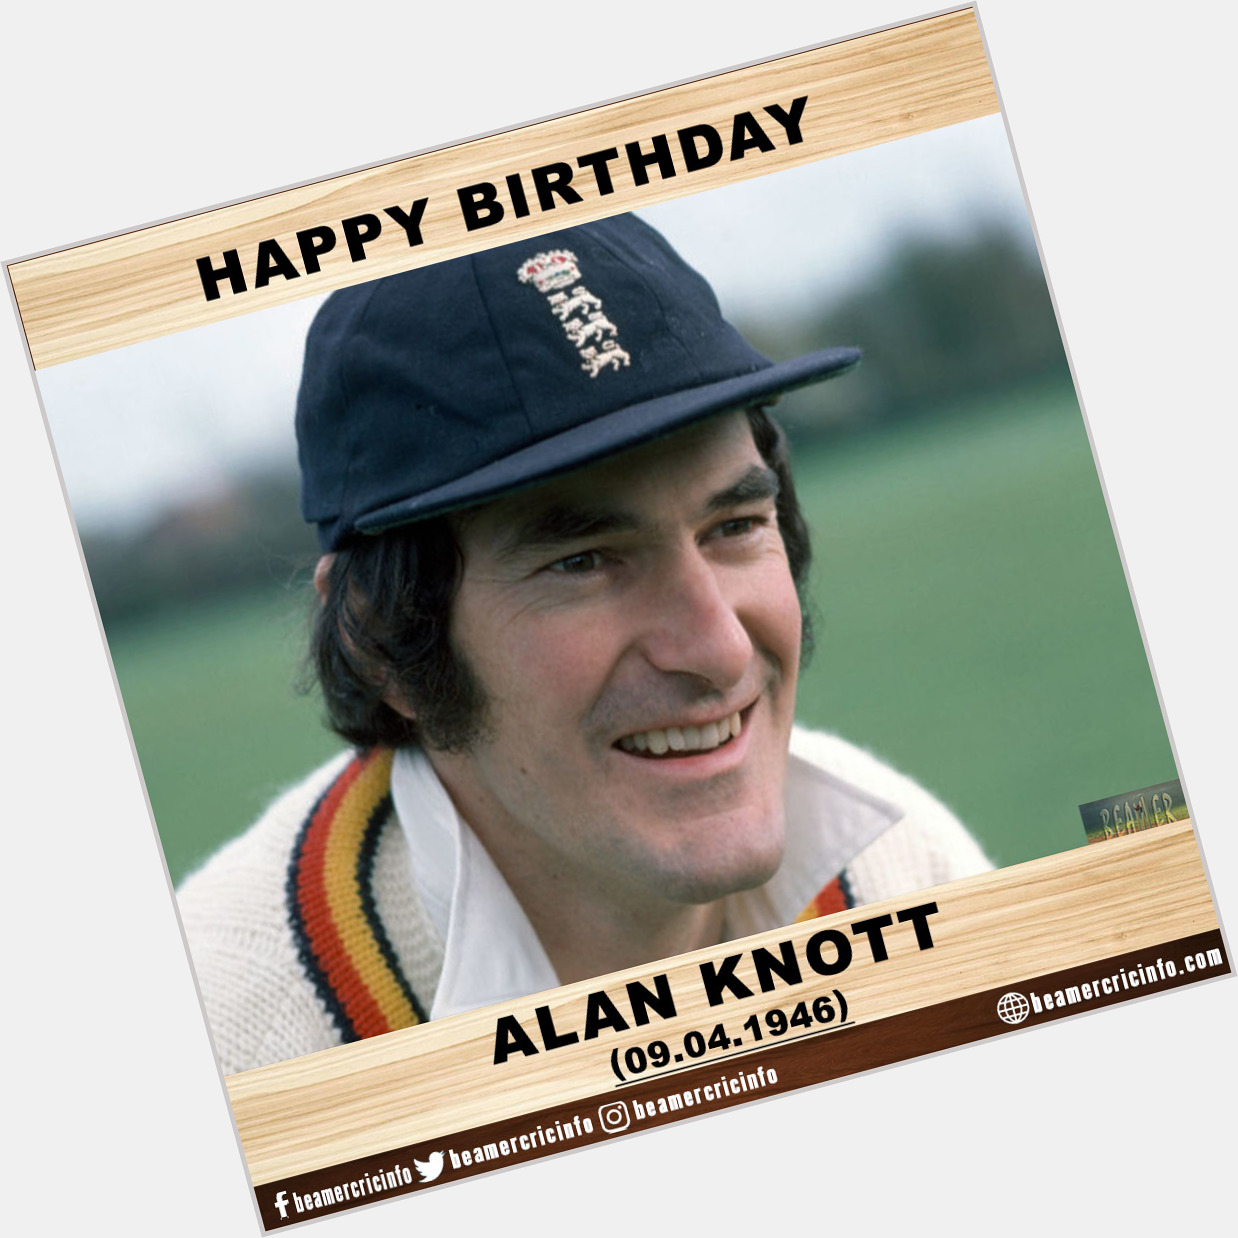 Happy Birthday!!!
Alan Knott...     